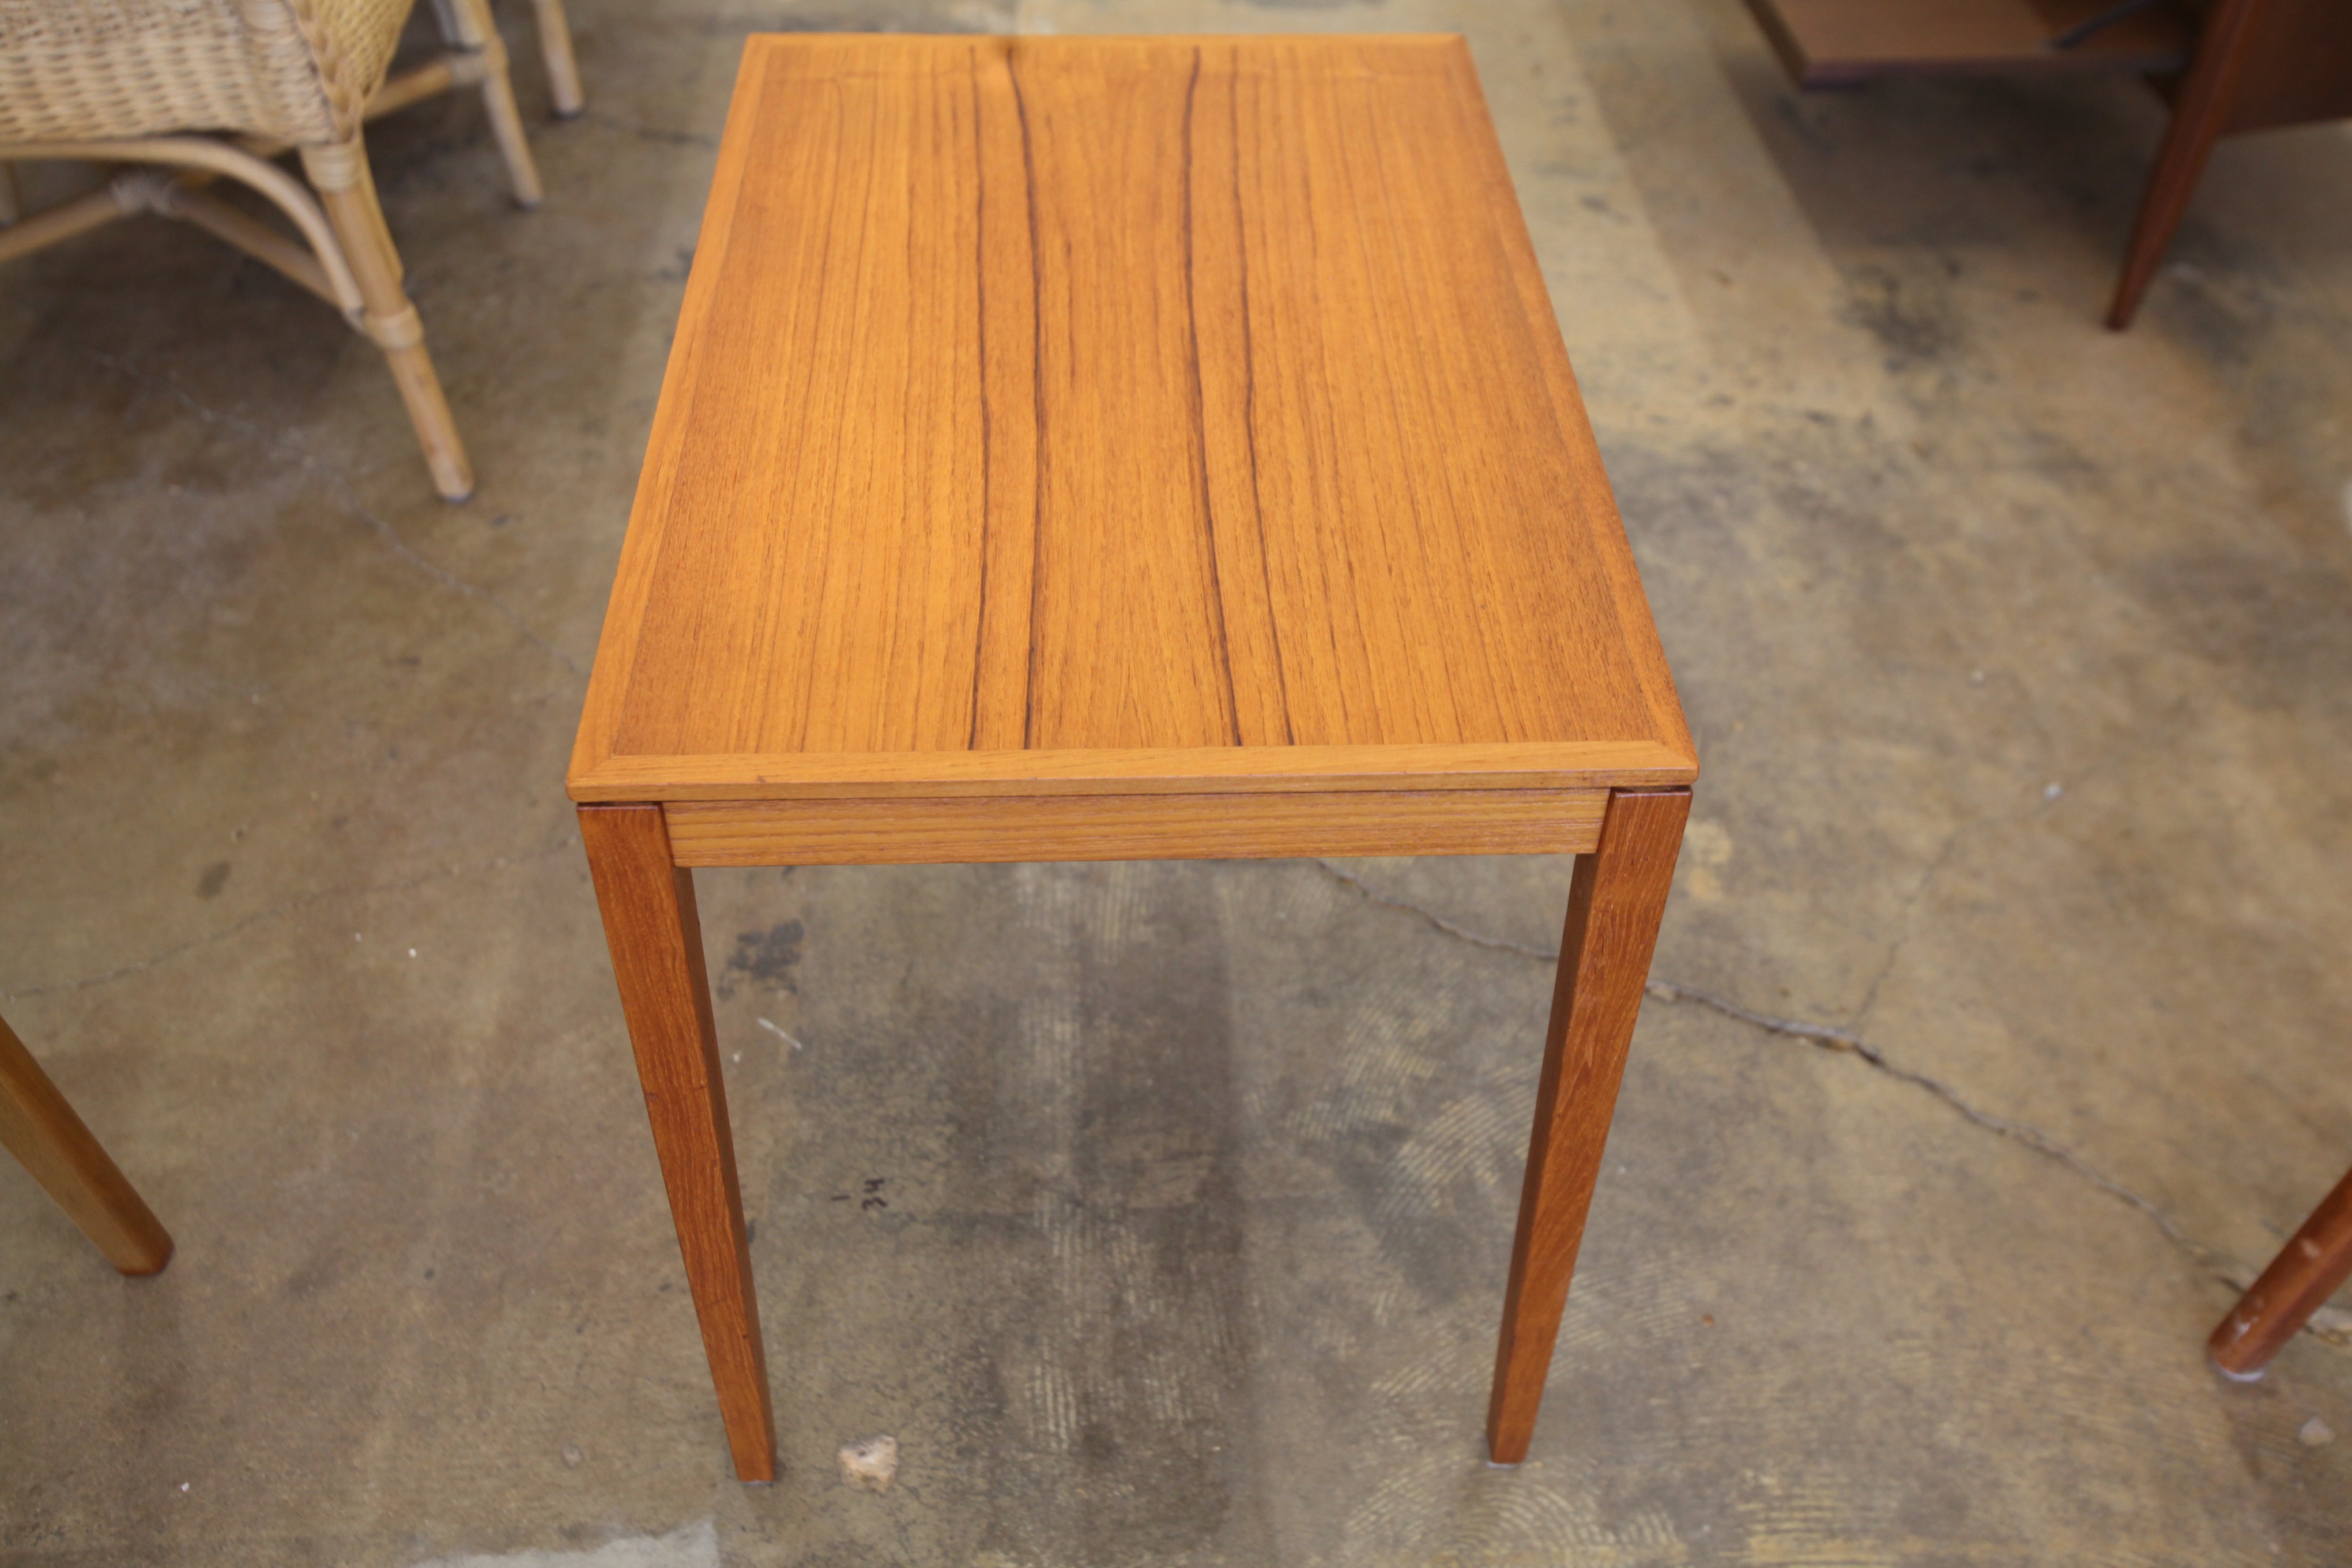 Vintage Medium Sized Teak Side Table by Bent Silberg (23.5" x 15.75" x 19.5"H)